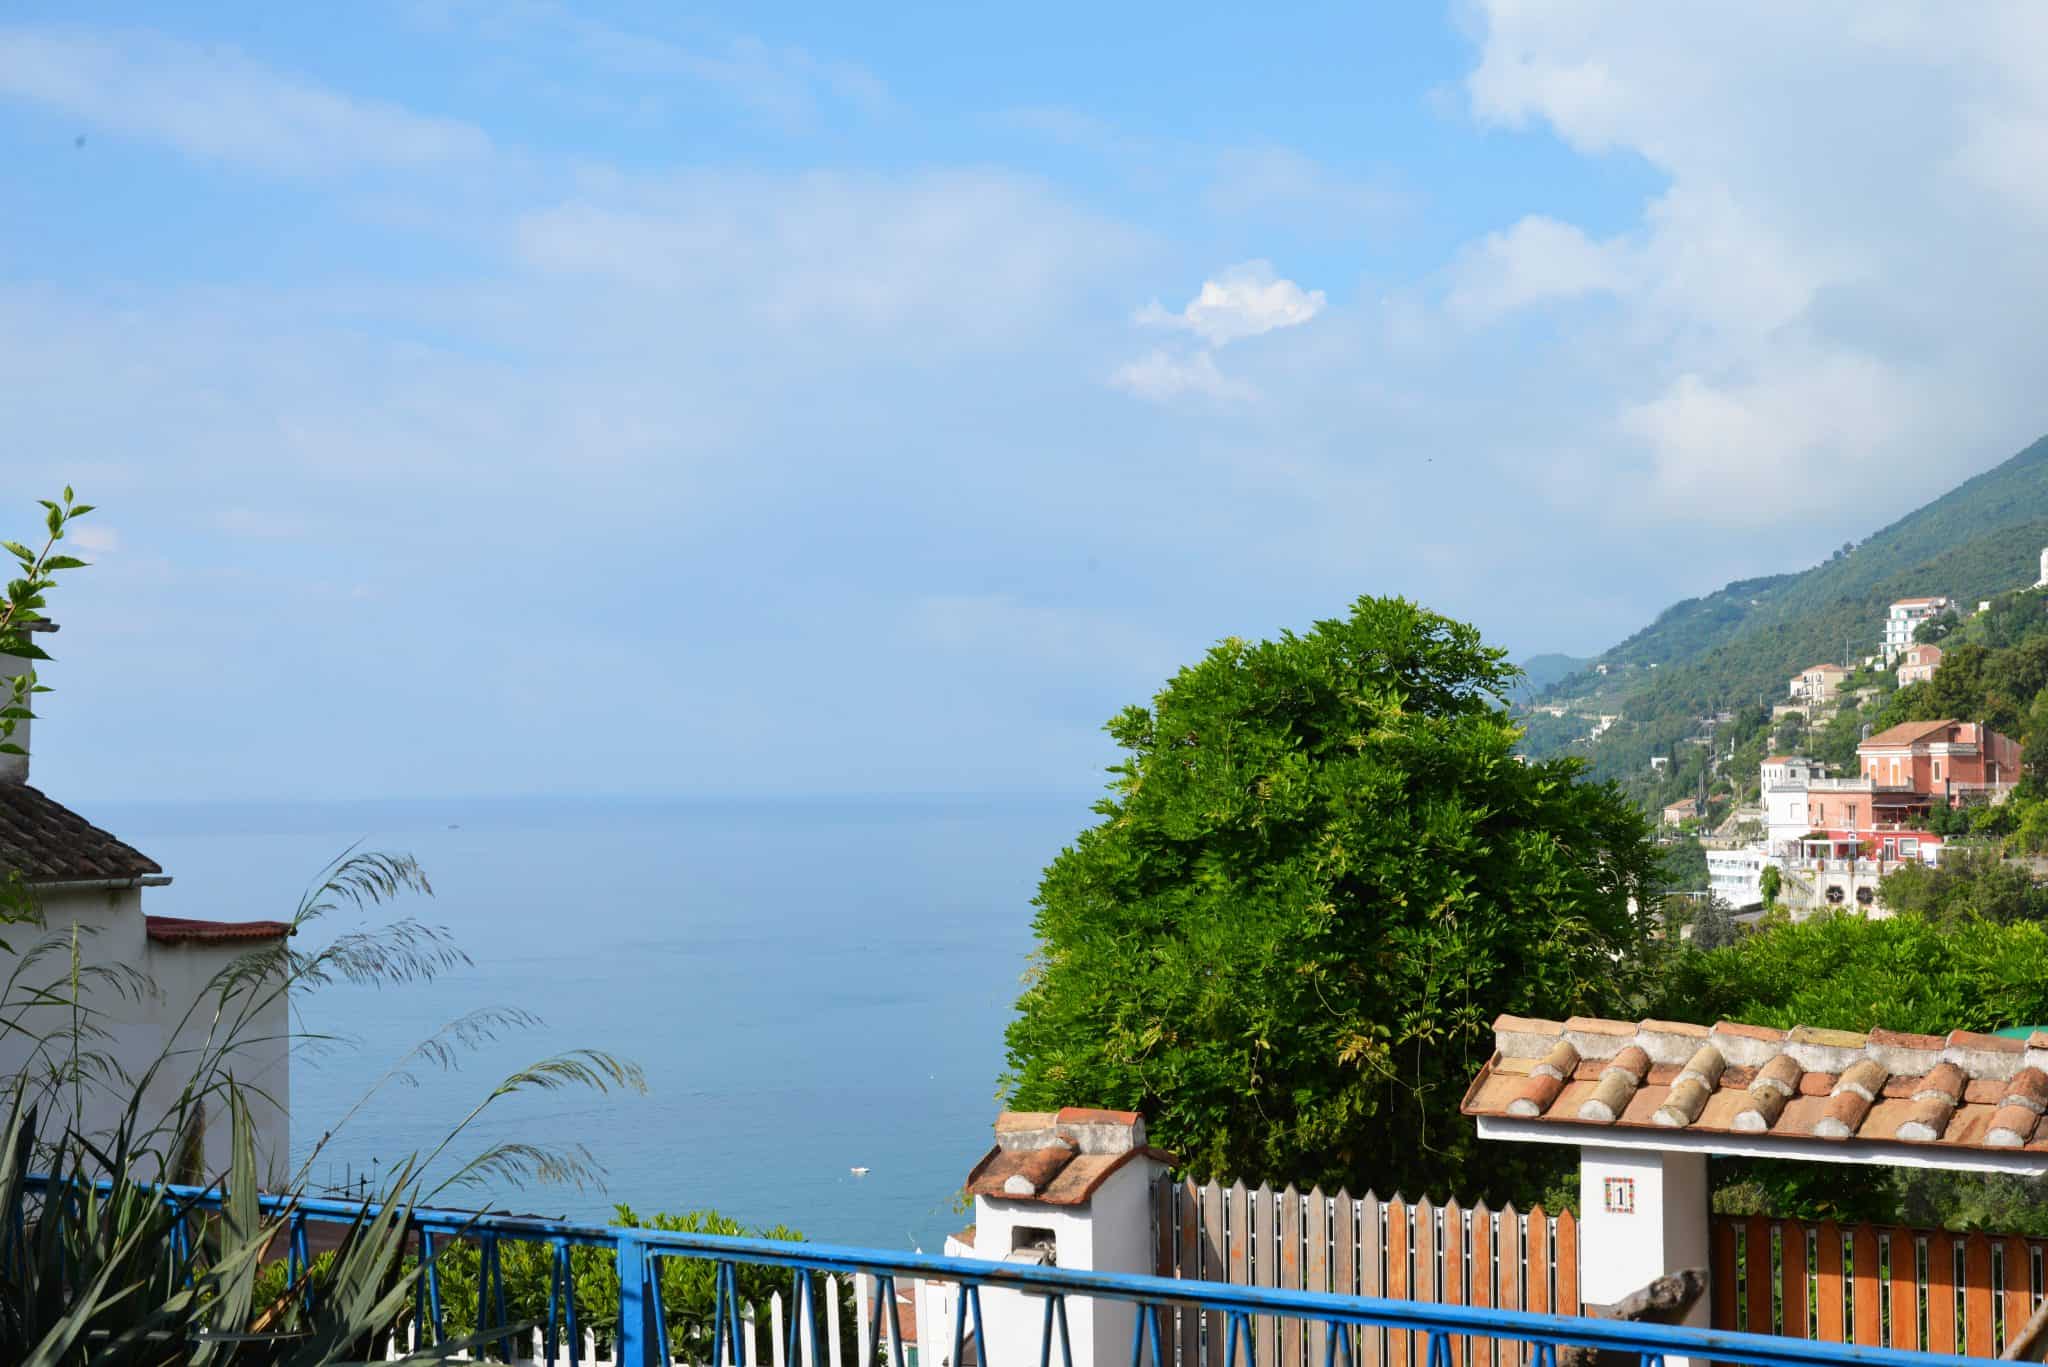 Planning Your Dream Vacation to Vietri Sul Mare, Italy on the Amalfi Coast. #traveltoitaly #amalficoast #italy www.savoryexperiments.com